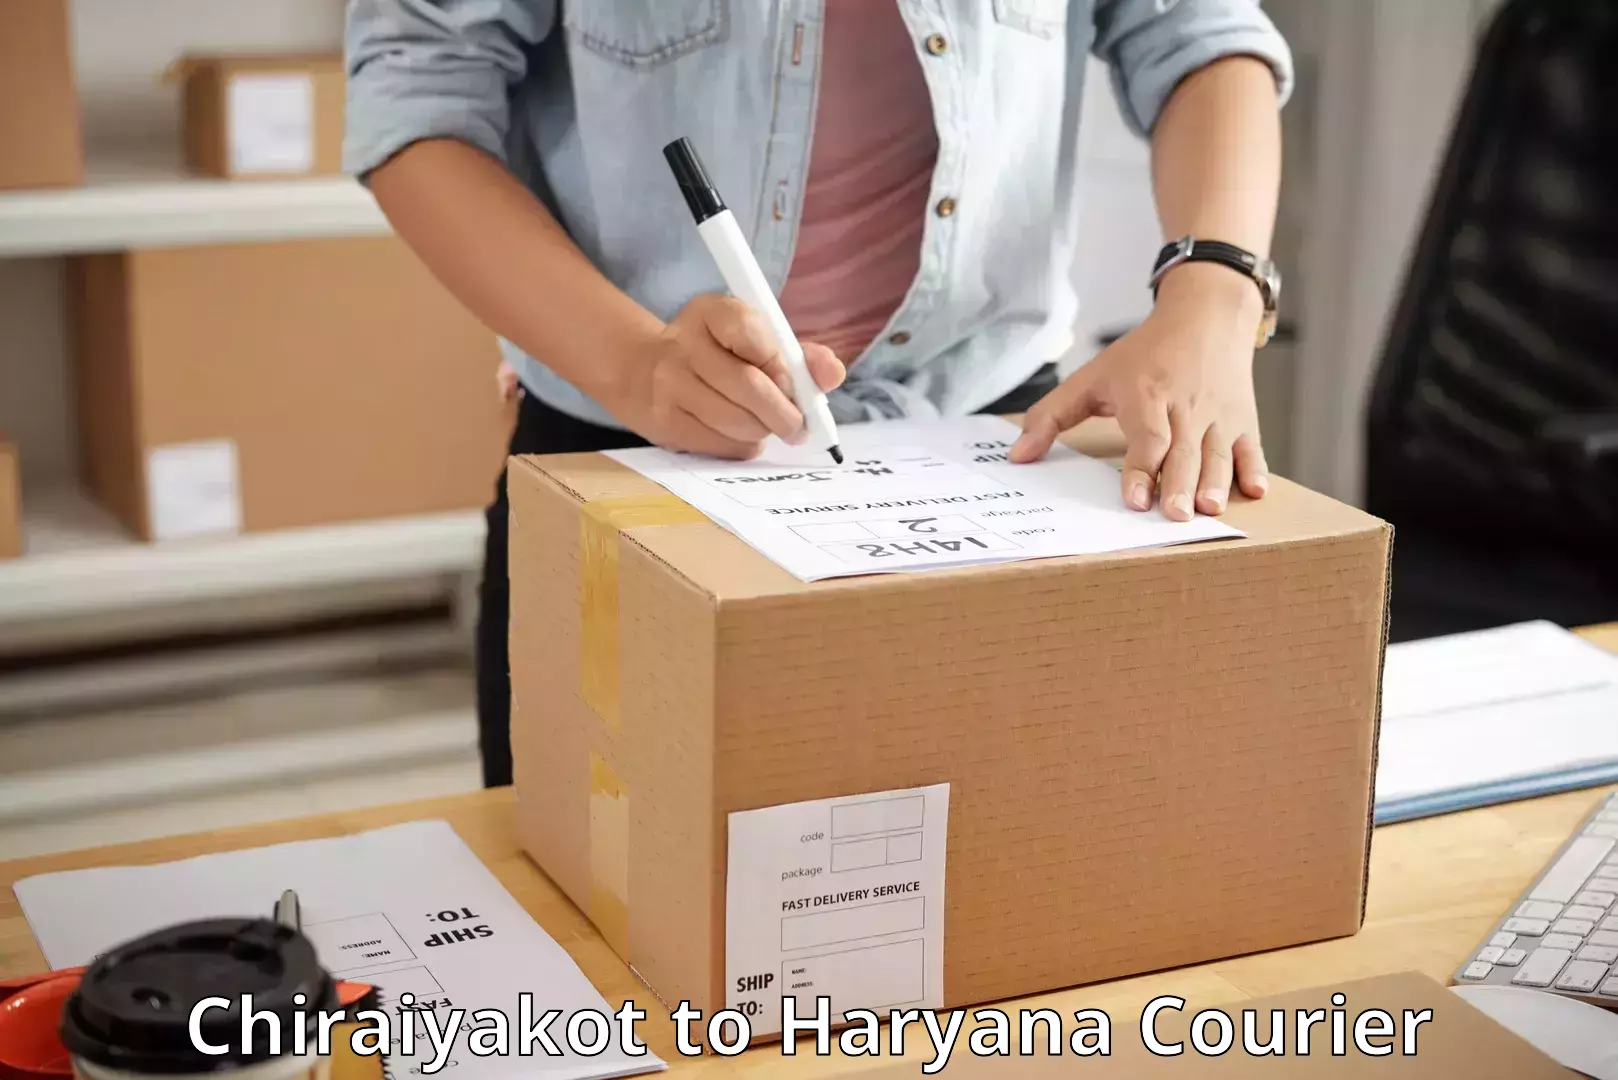 Package delivery network Chiraiyakot to Rewari